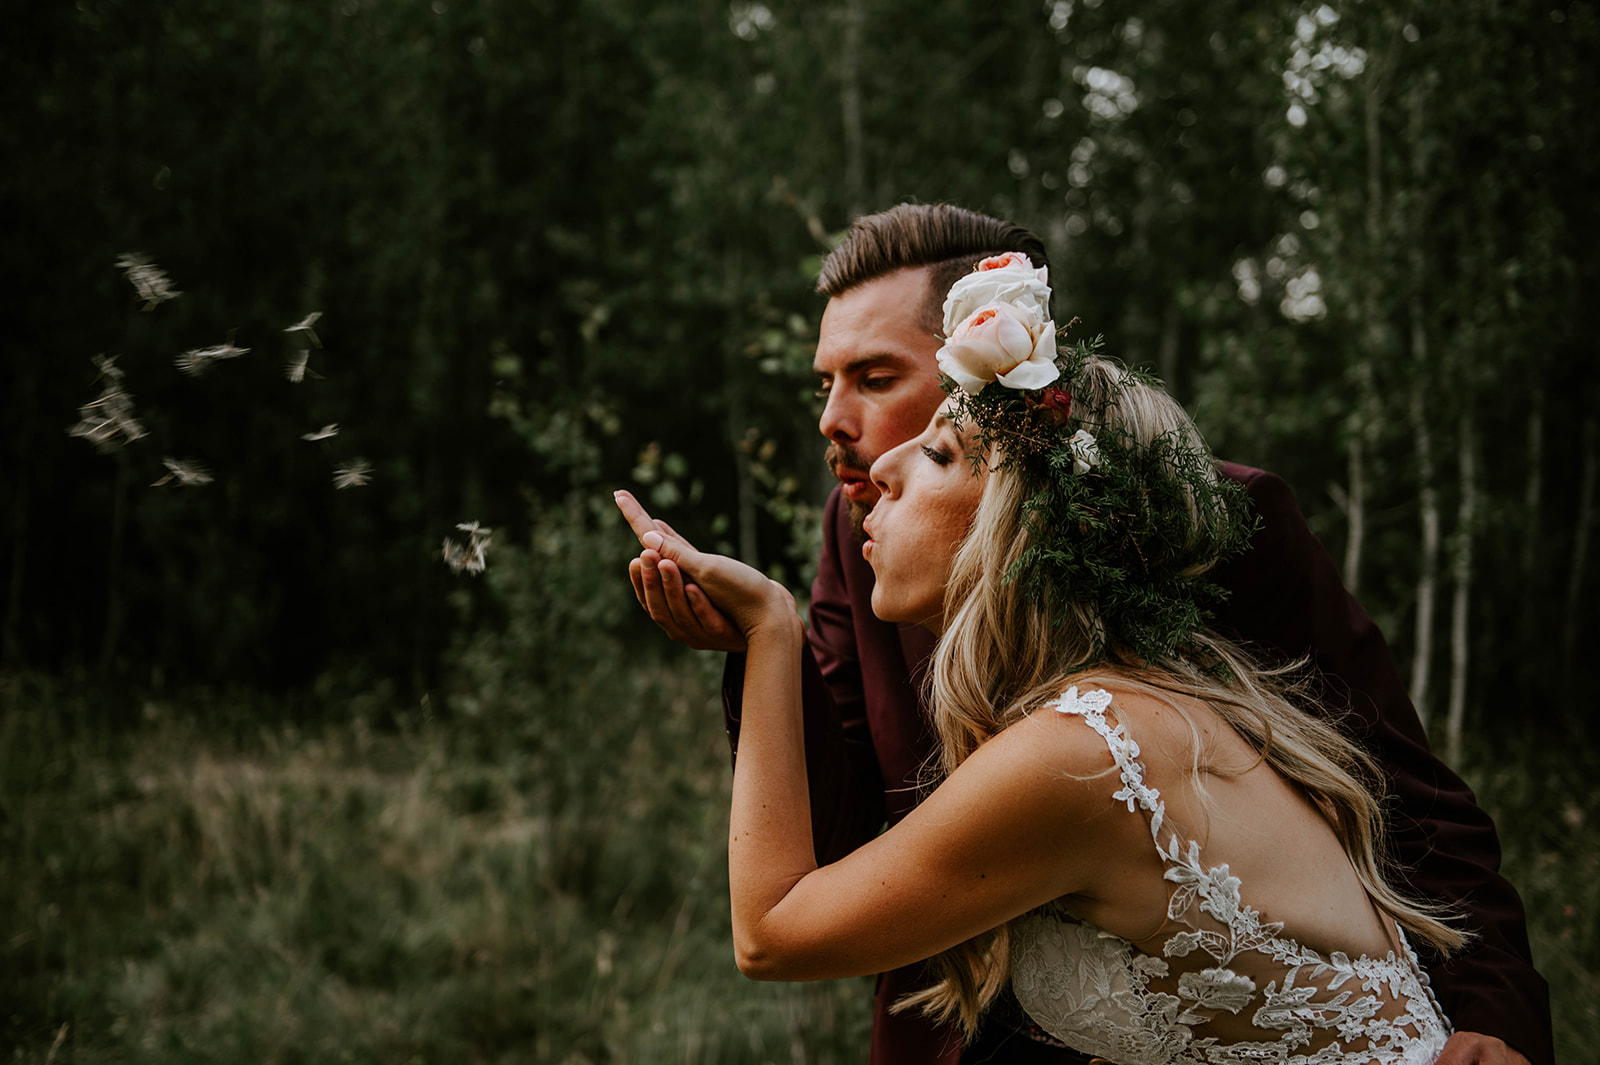 Bride and groom making a wish on a dandelion together at shevlin park 